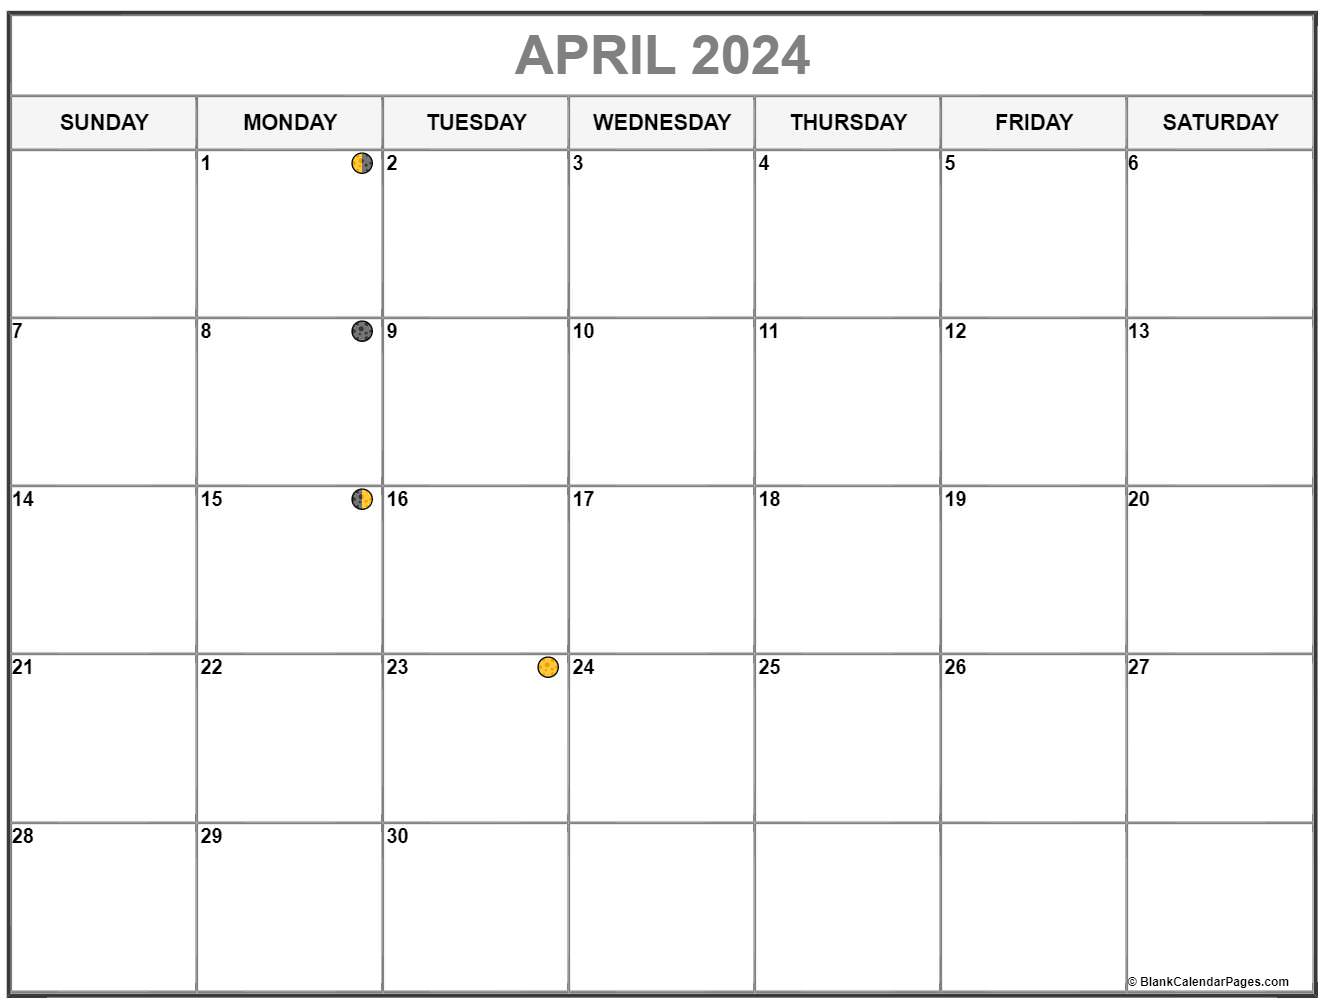 April 2022 Lunar Calendar Moon Phase Calendar